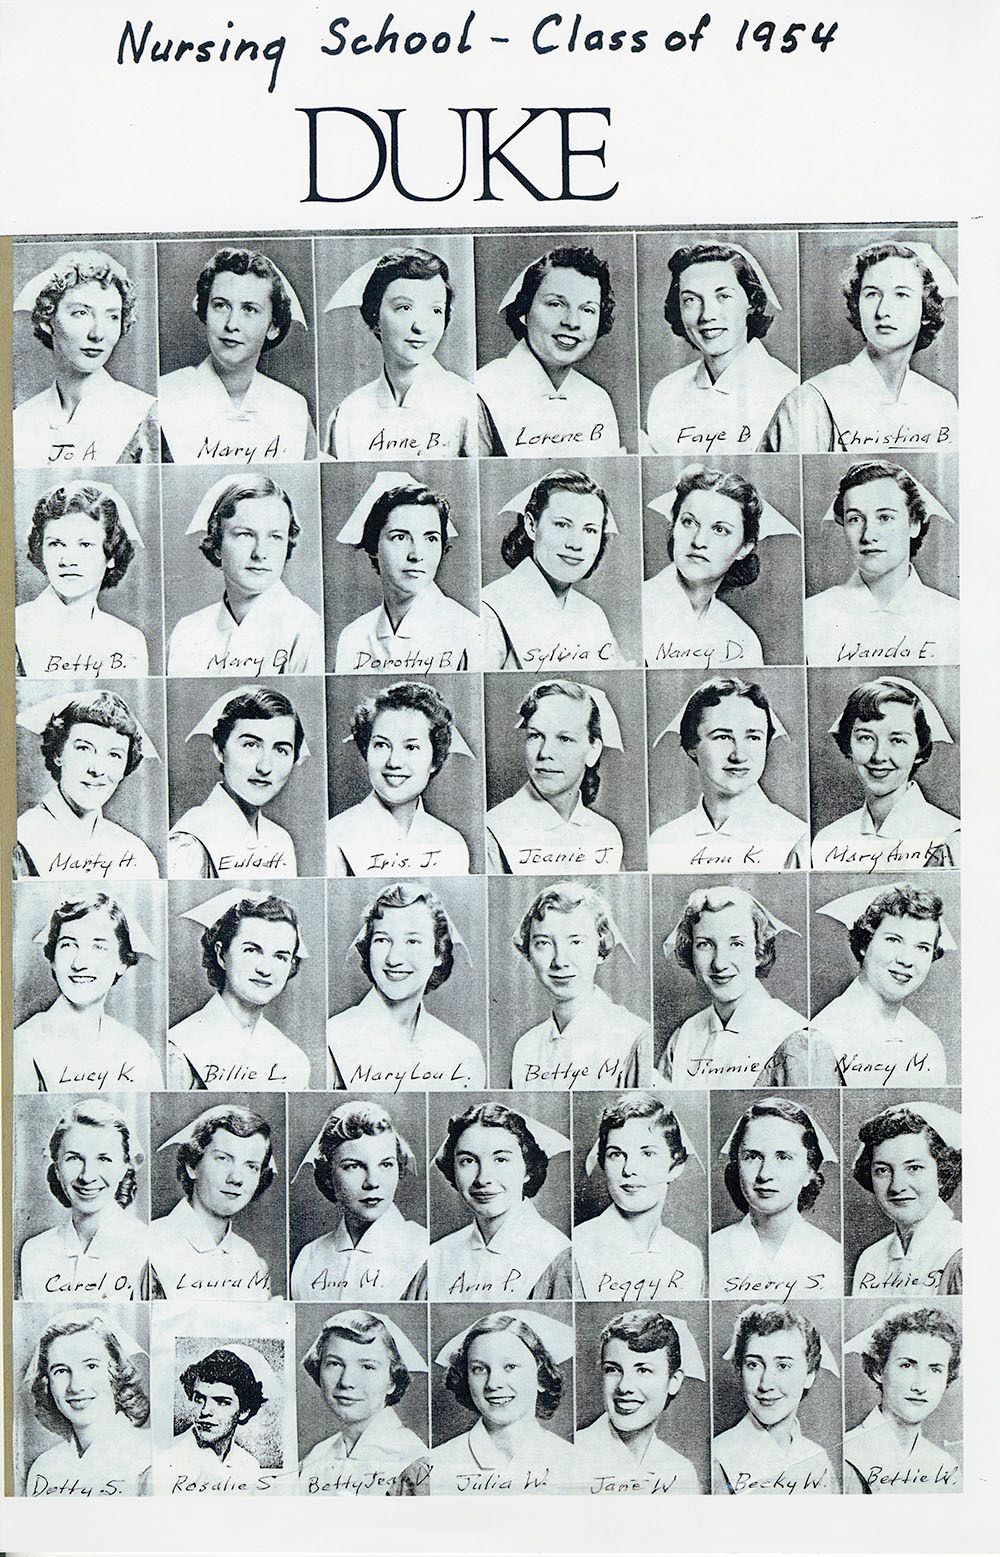 DUSON Class of 1954